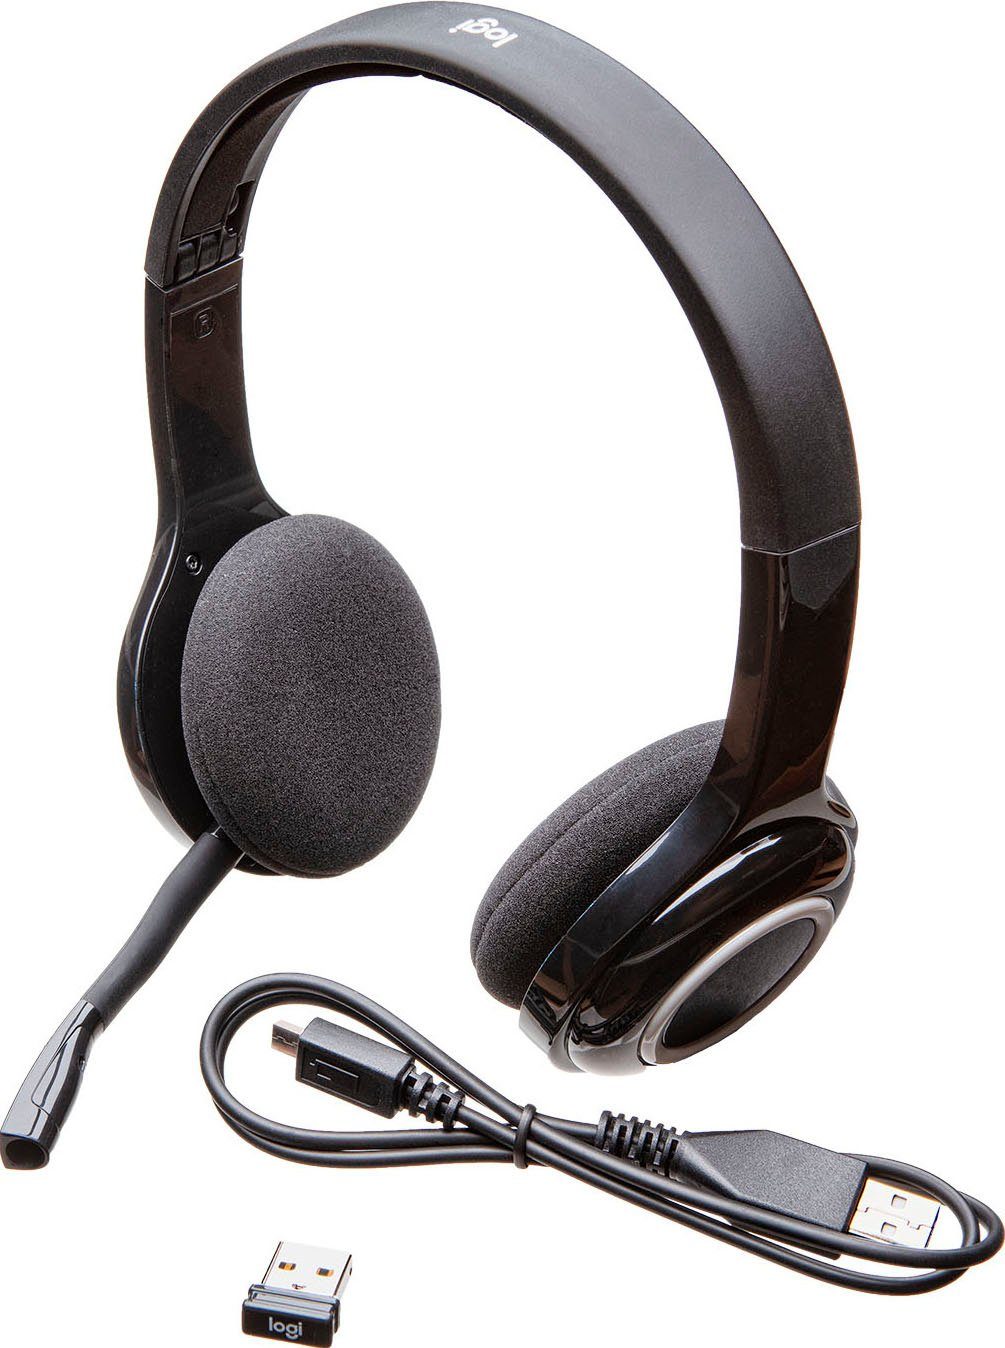 Logitech »Wireless Headset H600« PC-Headset kaufen | OTTO